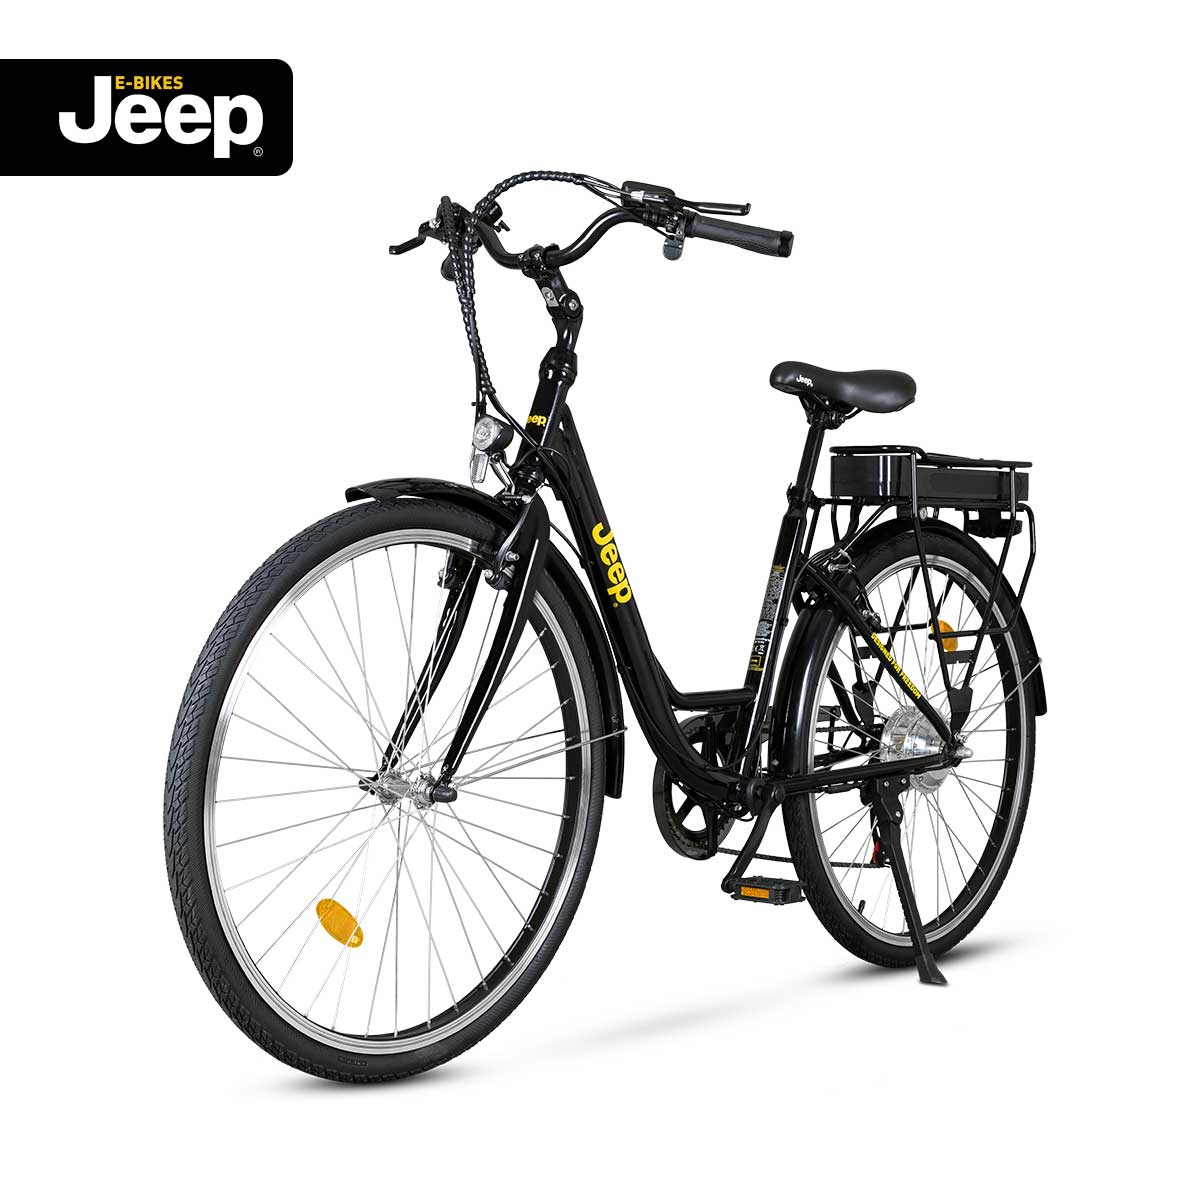 28 SHIMANO (Laufradgröße: 44 cm, black Wh, black) Zoll, ECR Kettenschaltung, Rahmenhöhe: E-Bike E-BIKES Erwachsene-Rad, Citybike Jeep 28”, 6-Gang City JEEP 3000, 374,4